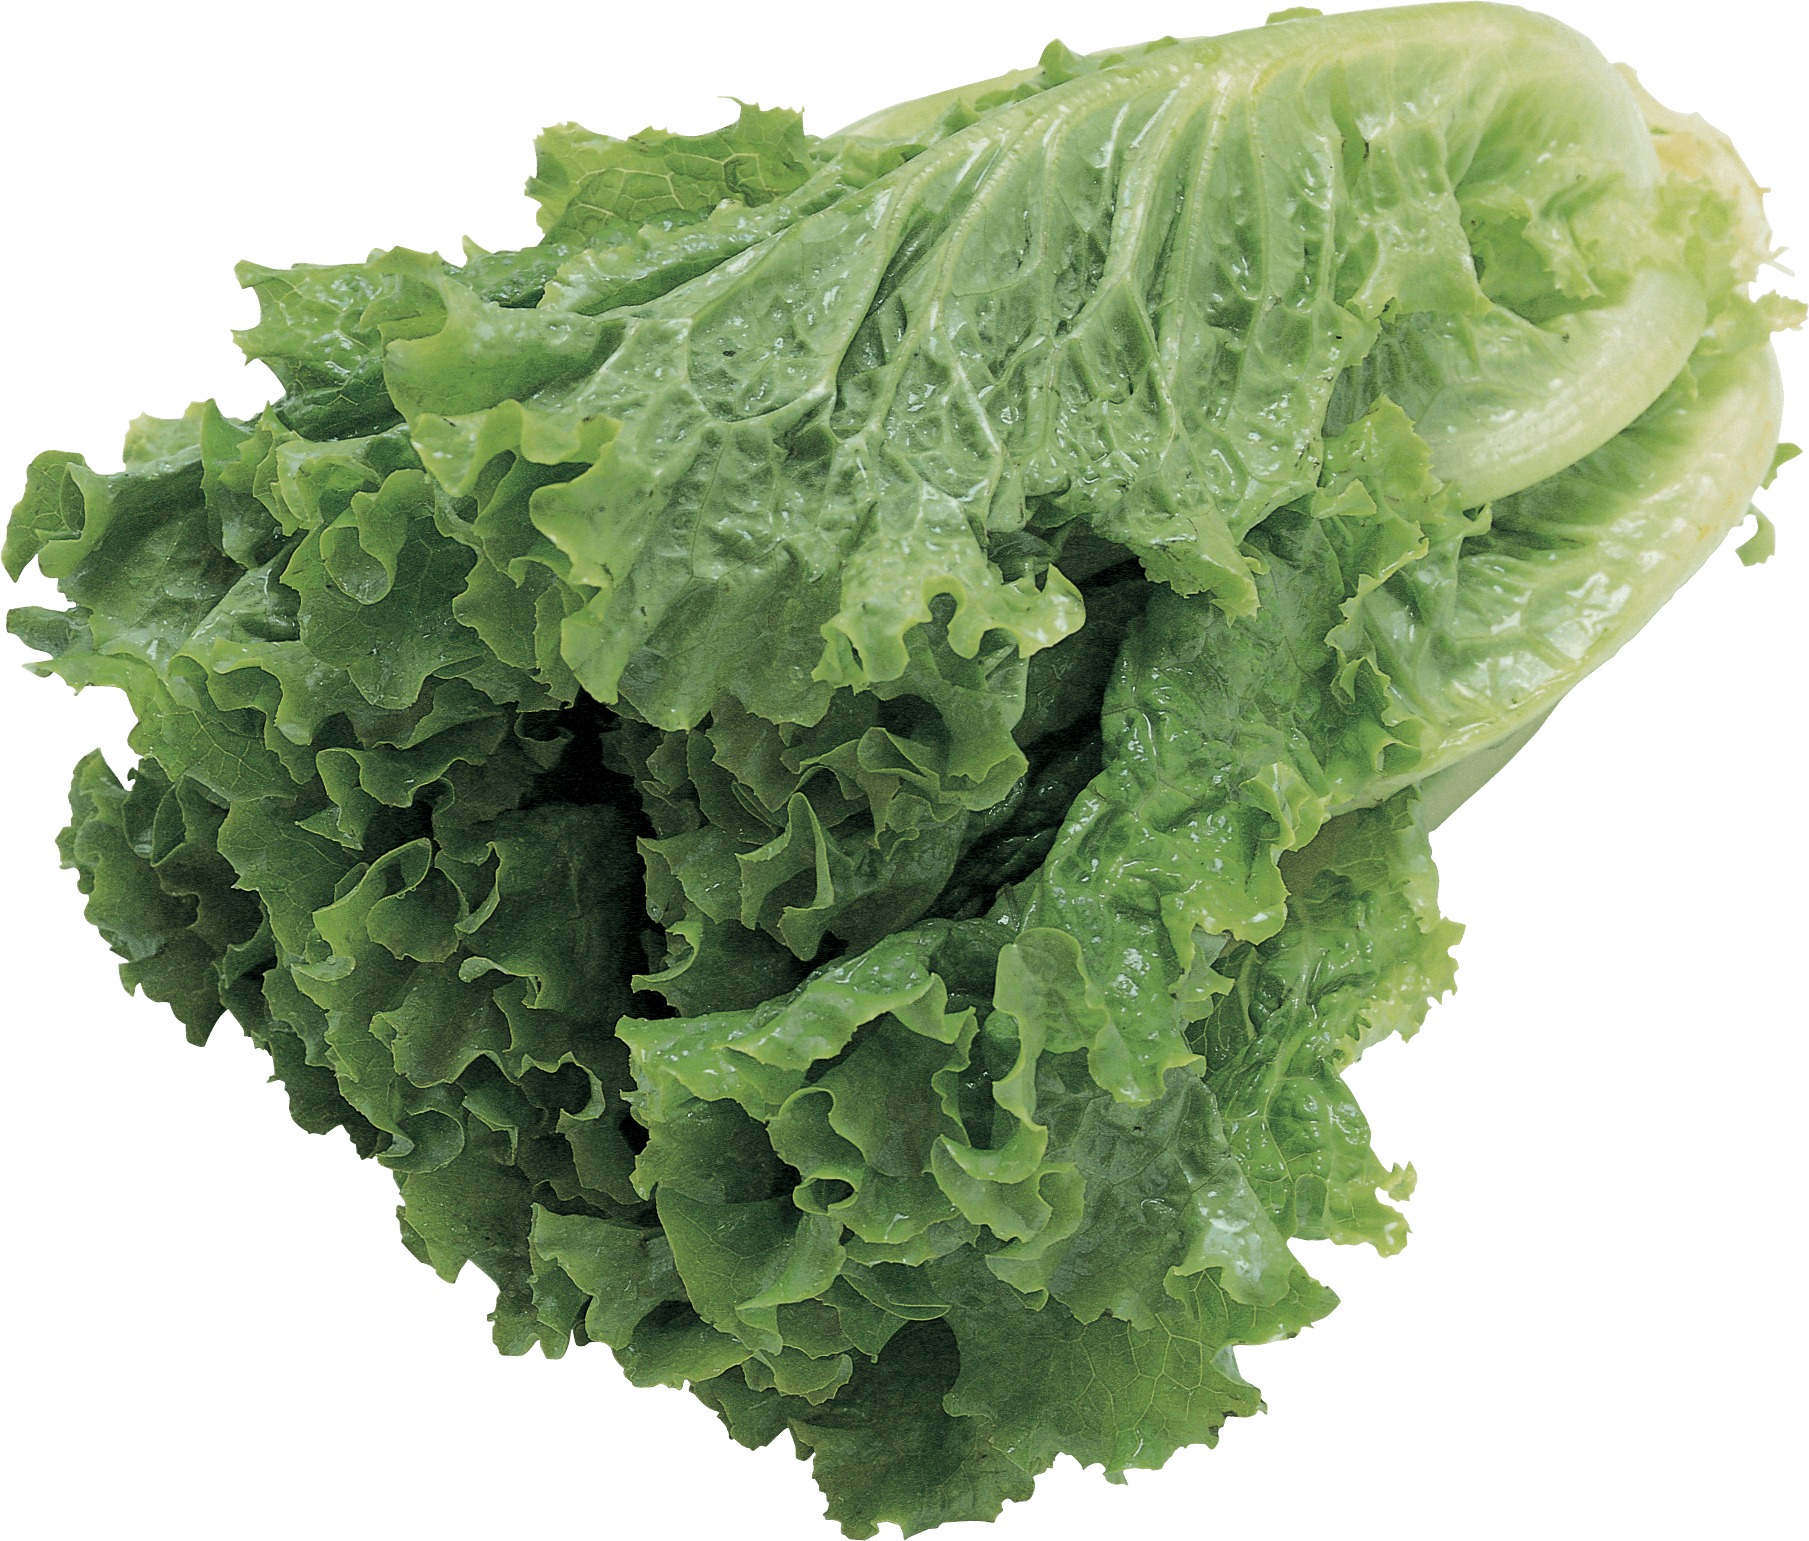 Salad Png Image PNG Image